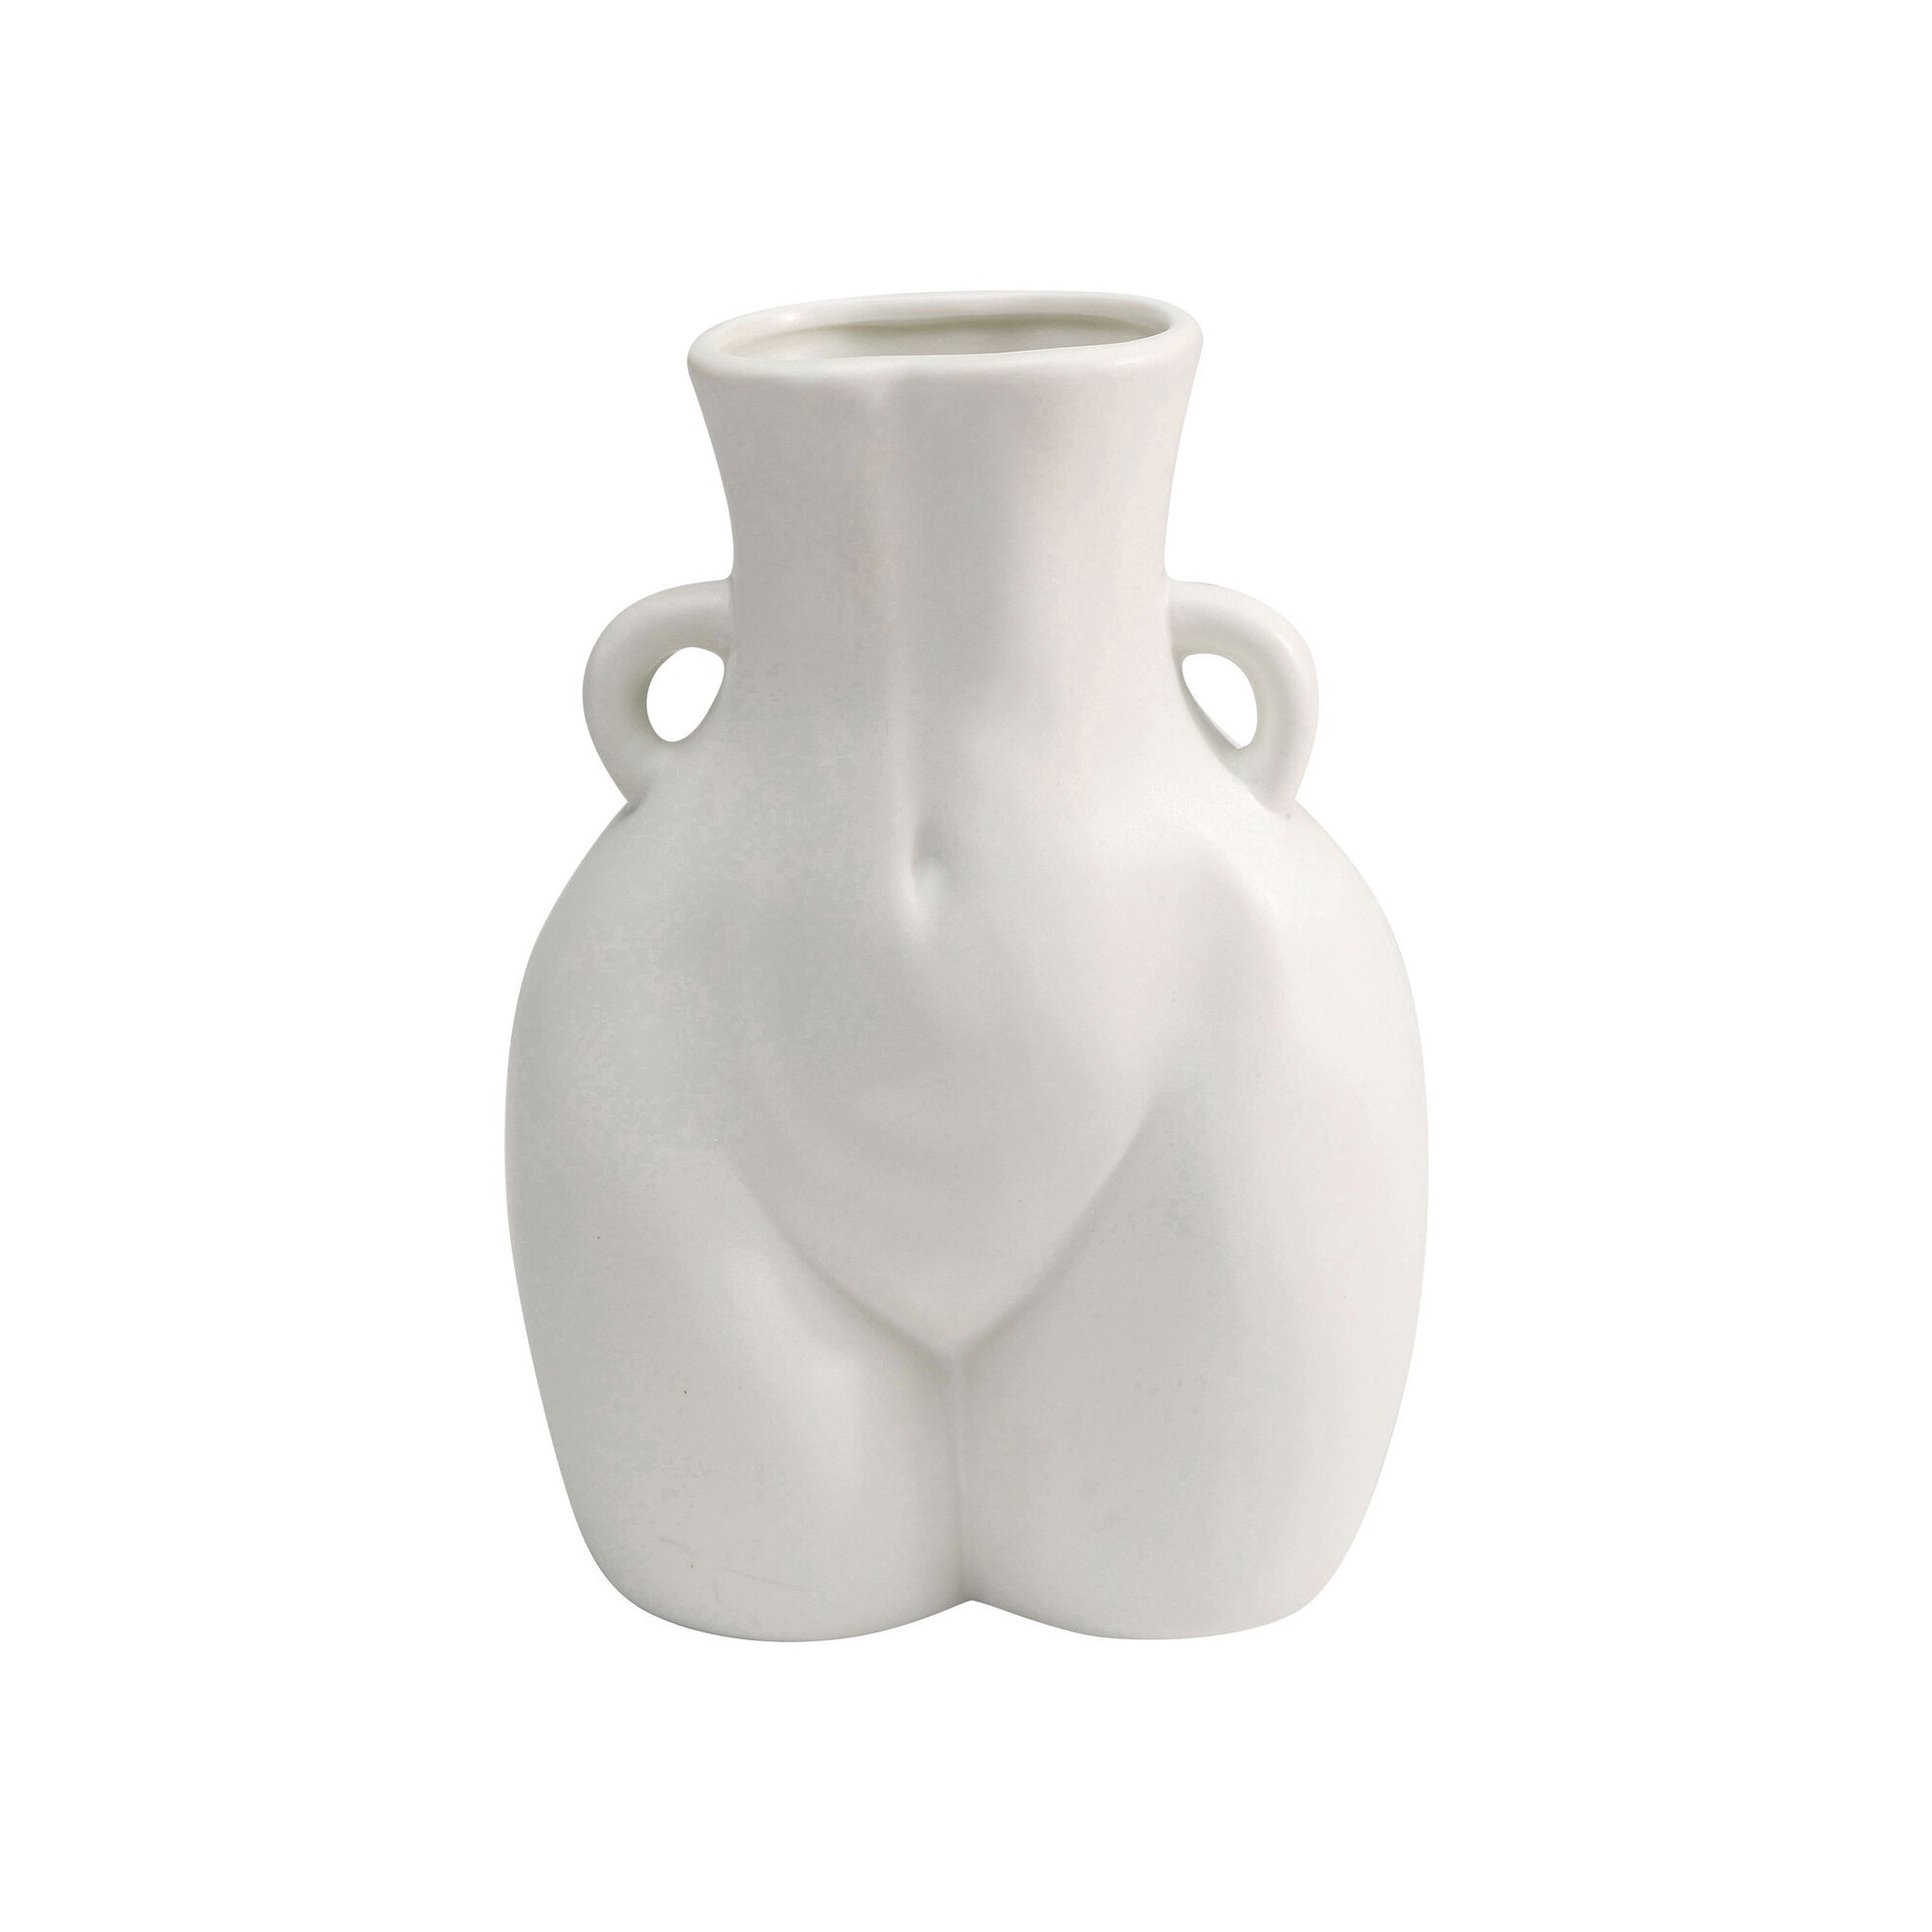 Vase Donna blanc 22cm Kare Design 